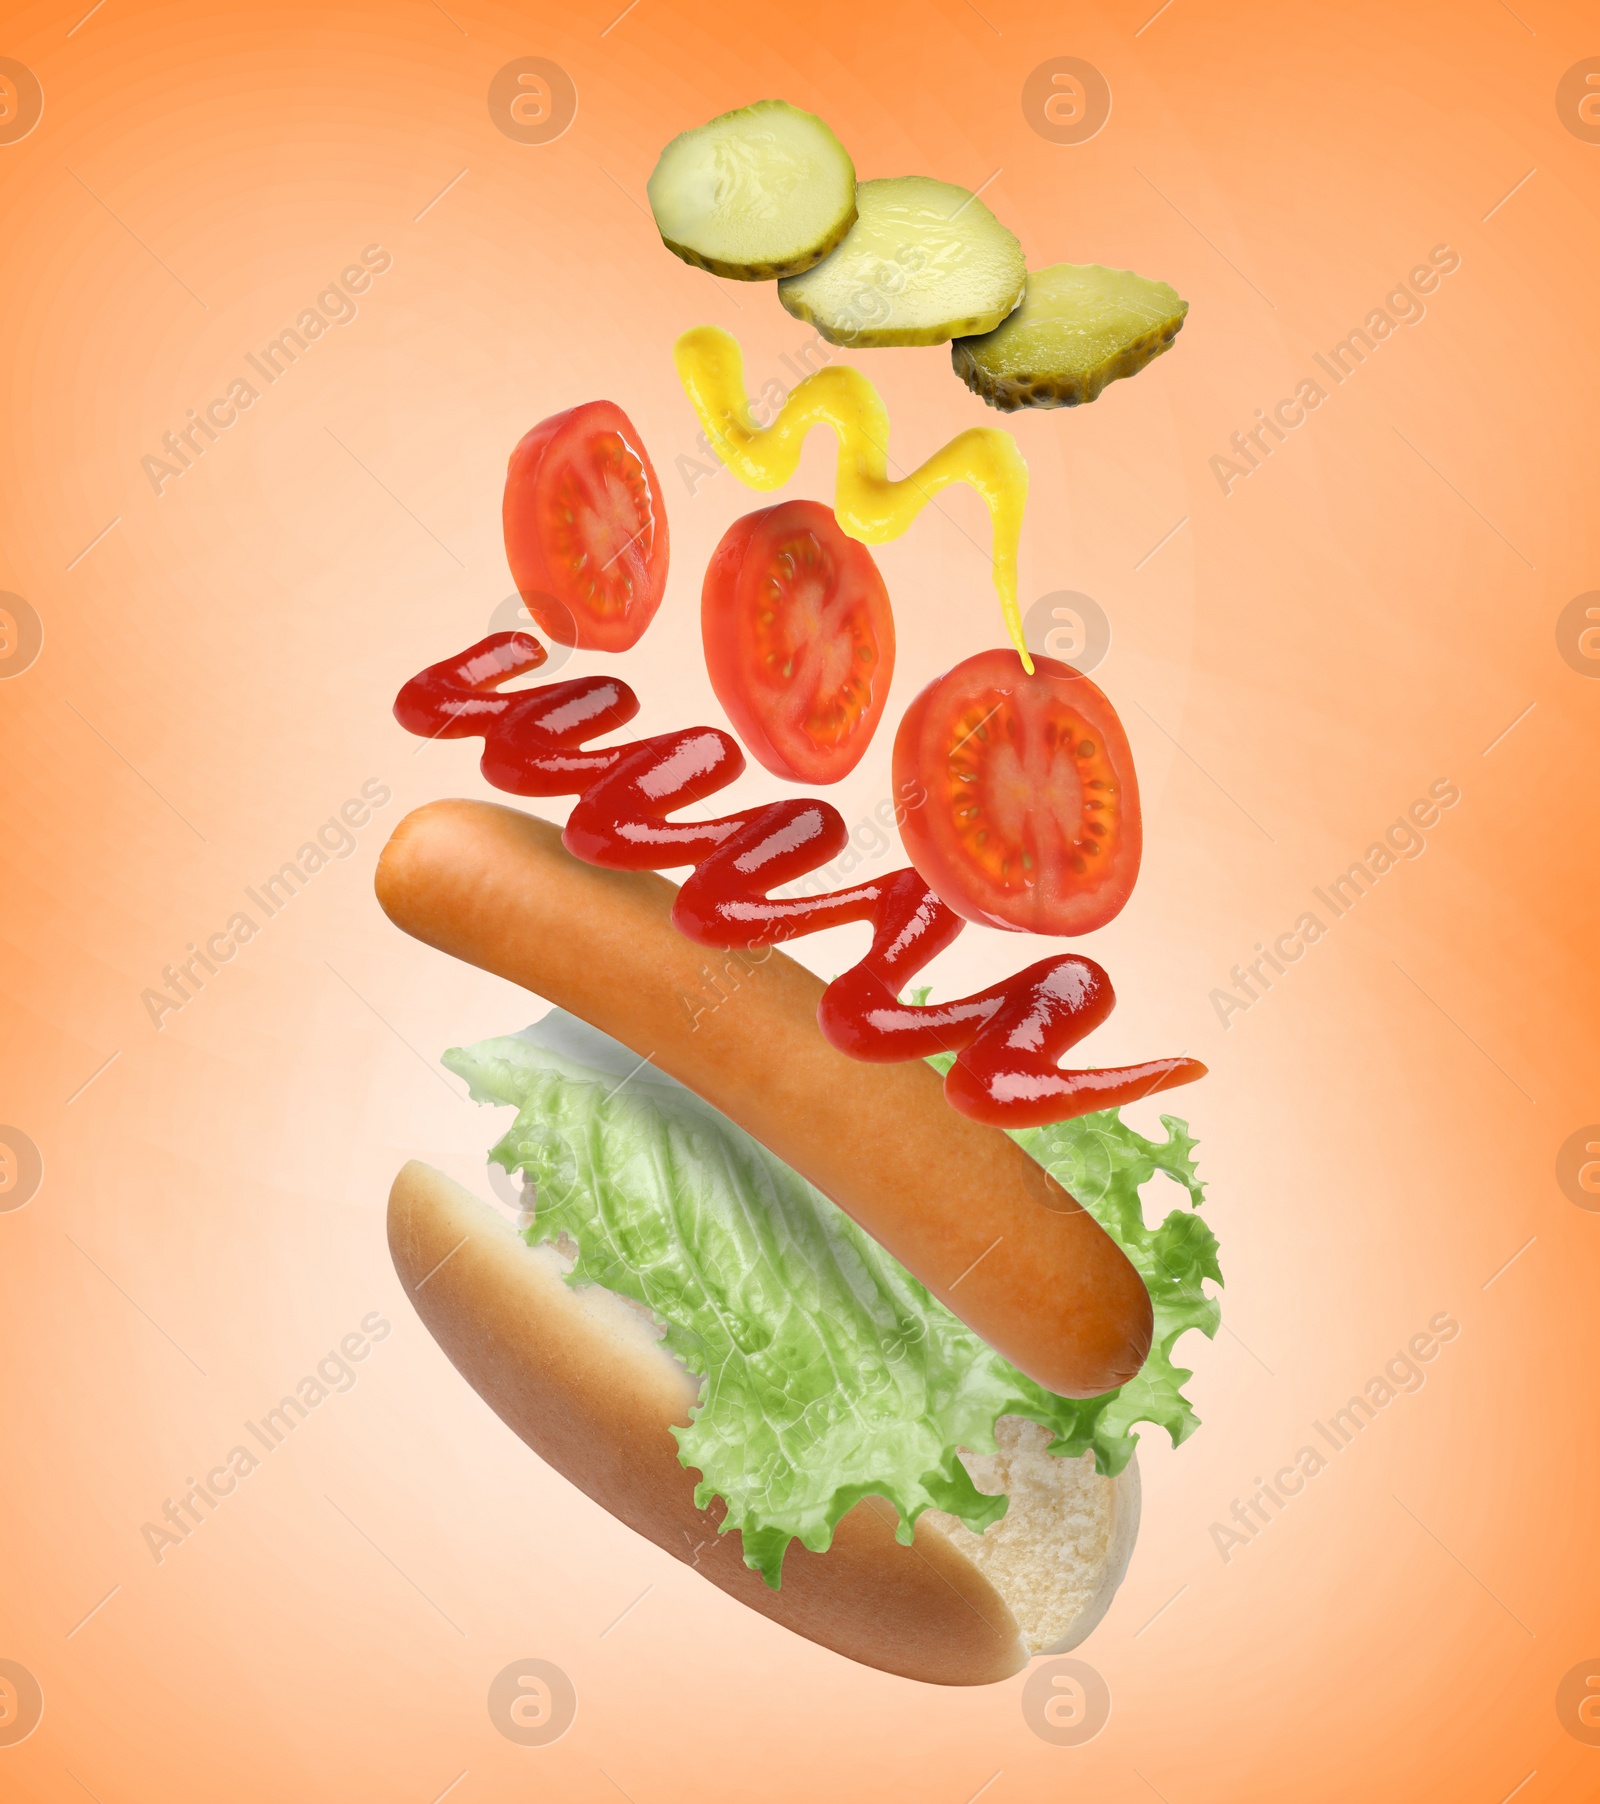 Image of Hot dog ingredients in air on orange gradient background